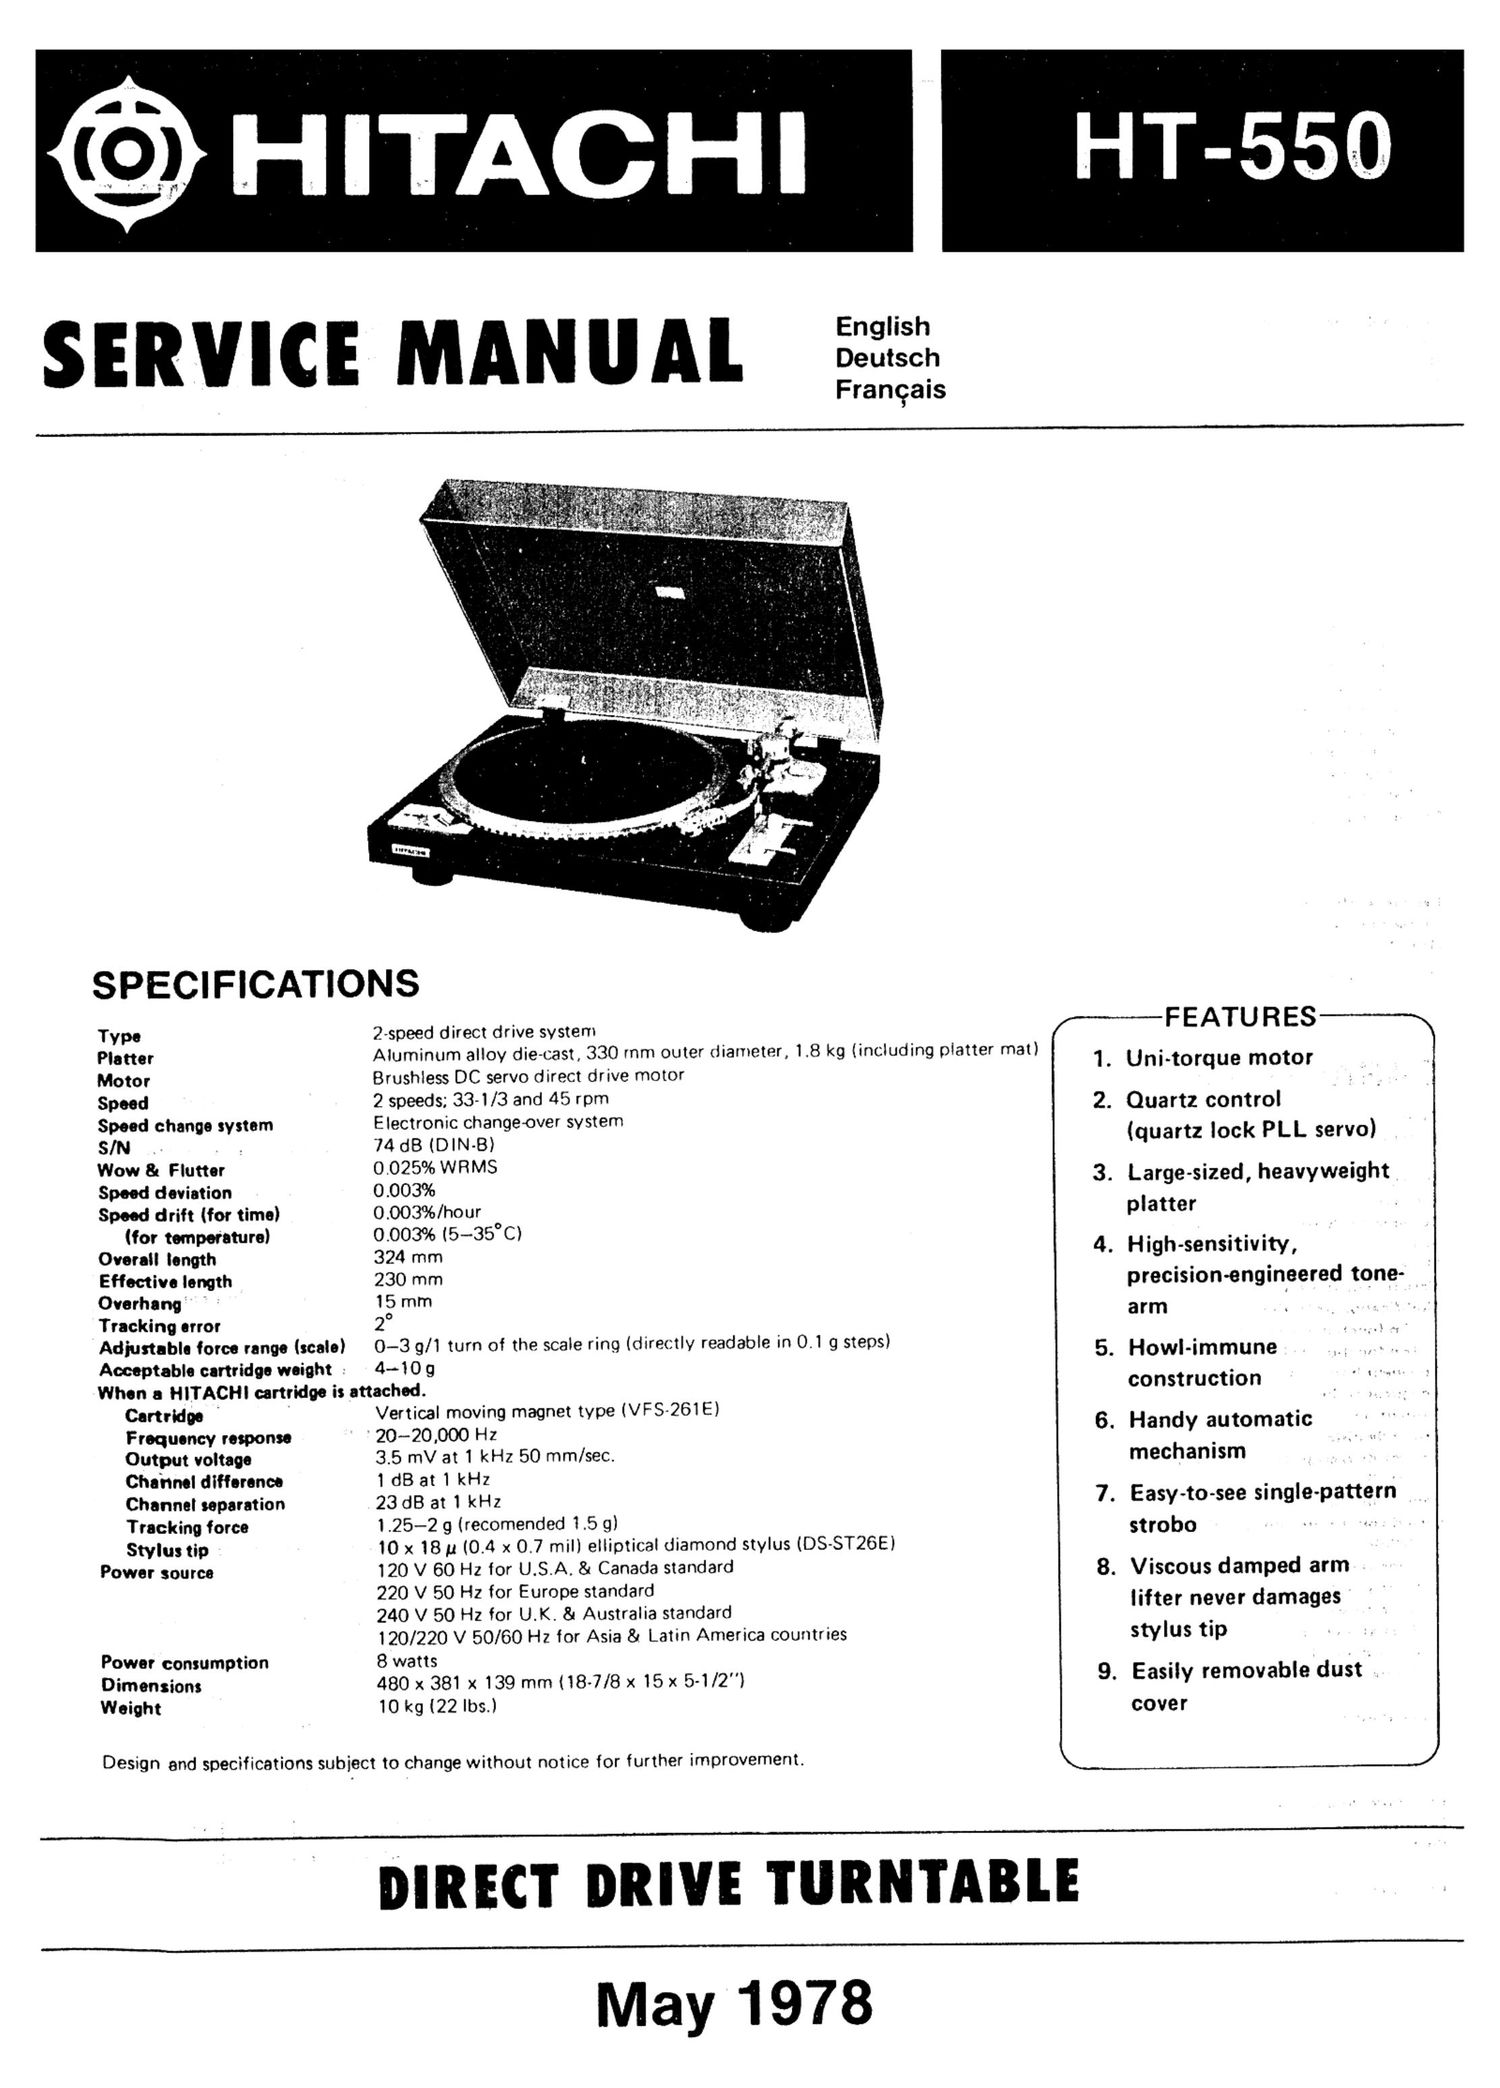 Hitachi HT 550 Service Manual